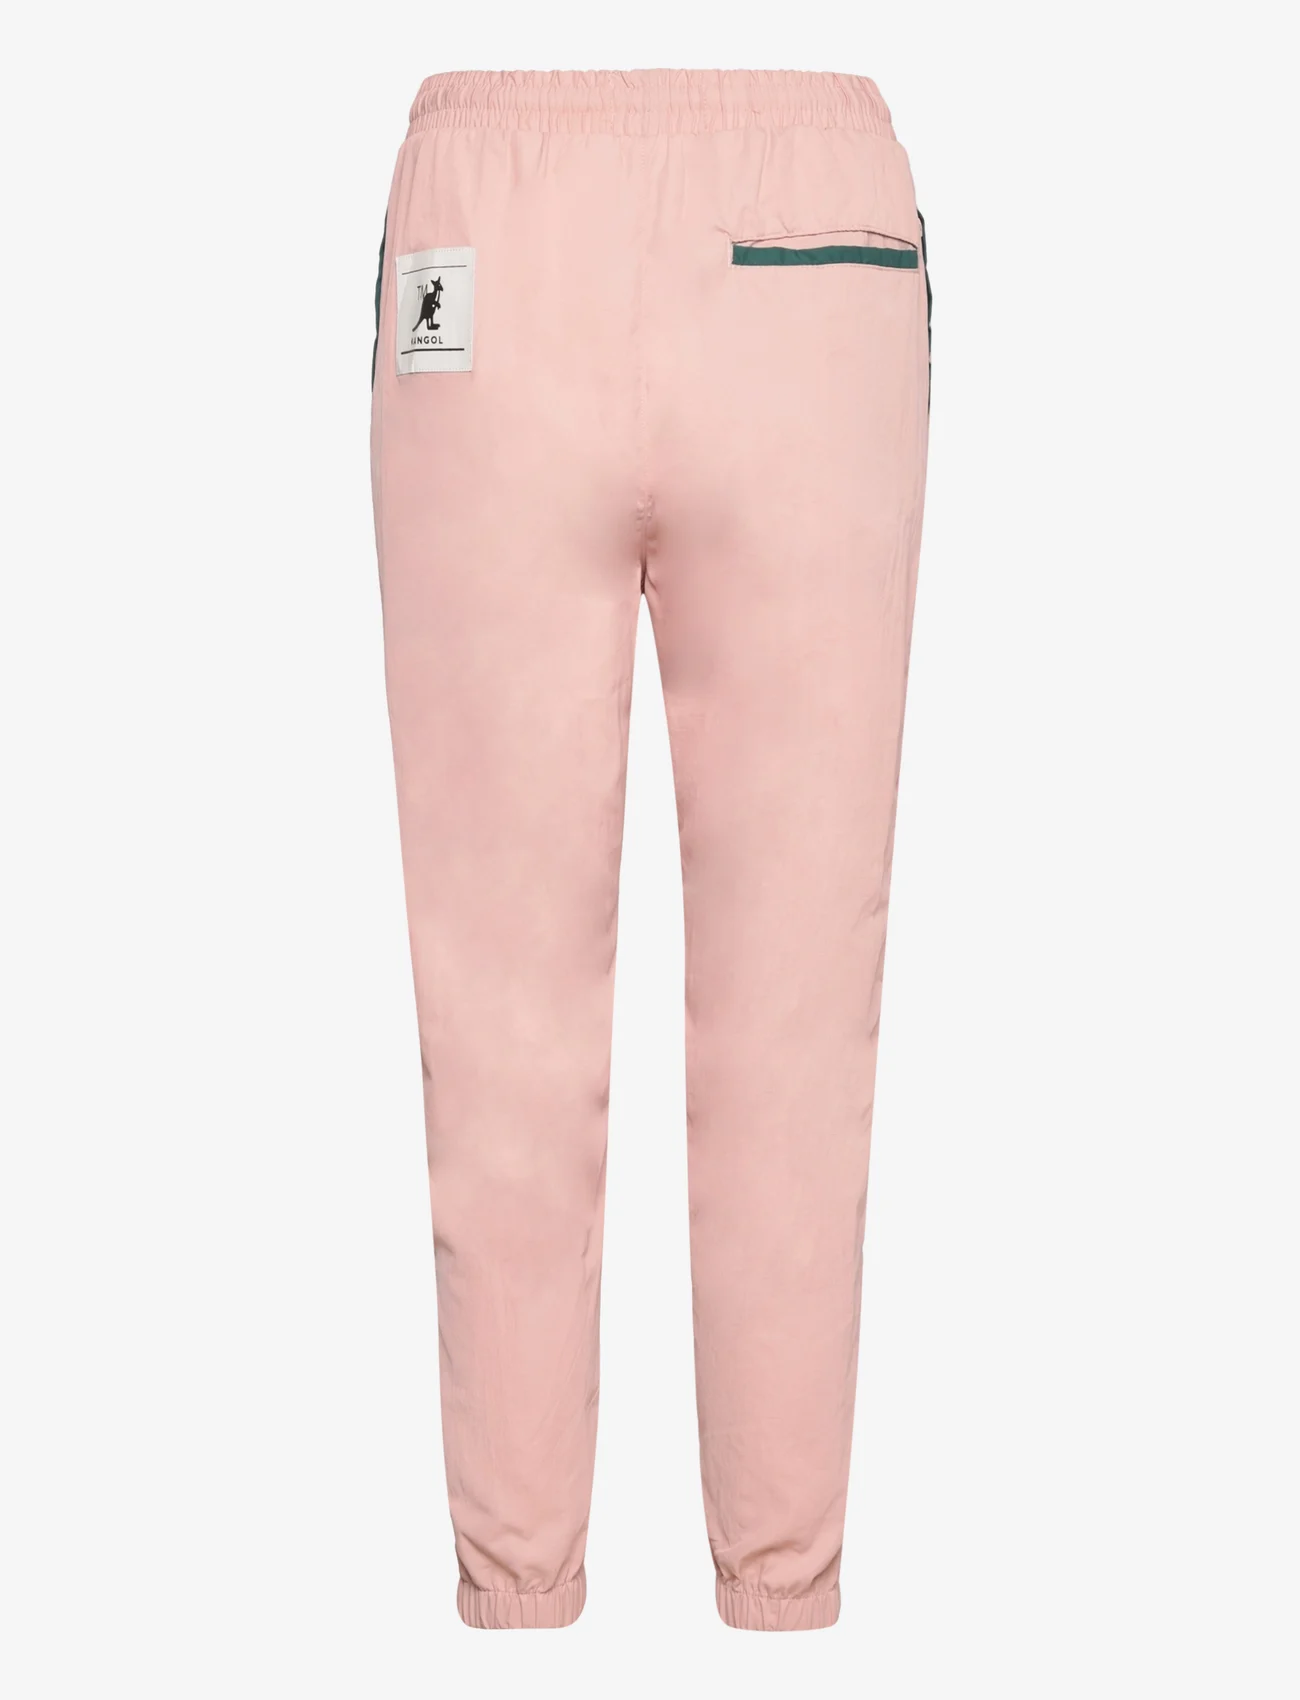 Kangol - KG TAMPA TRACK PANTS - slim fit bukser - light pink - 1